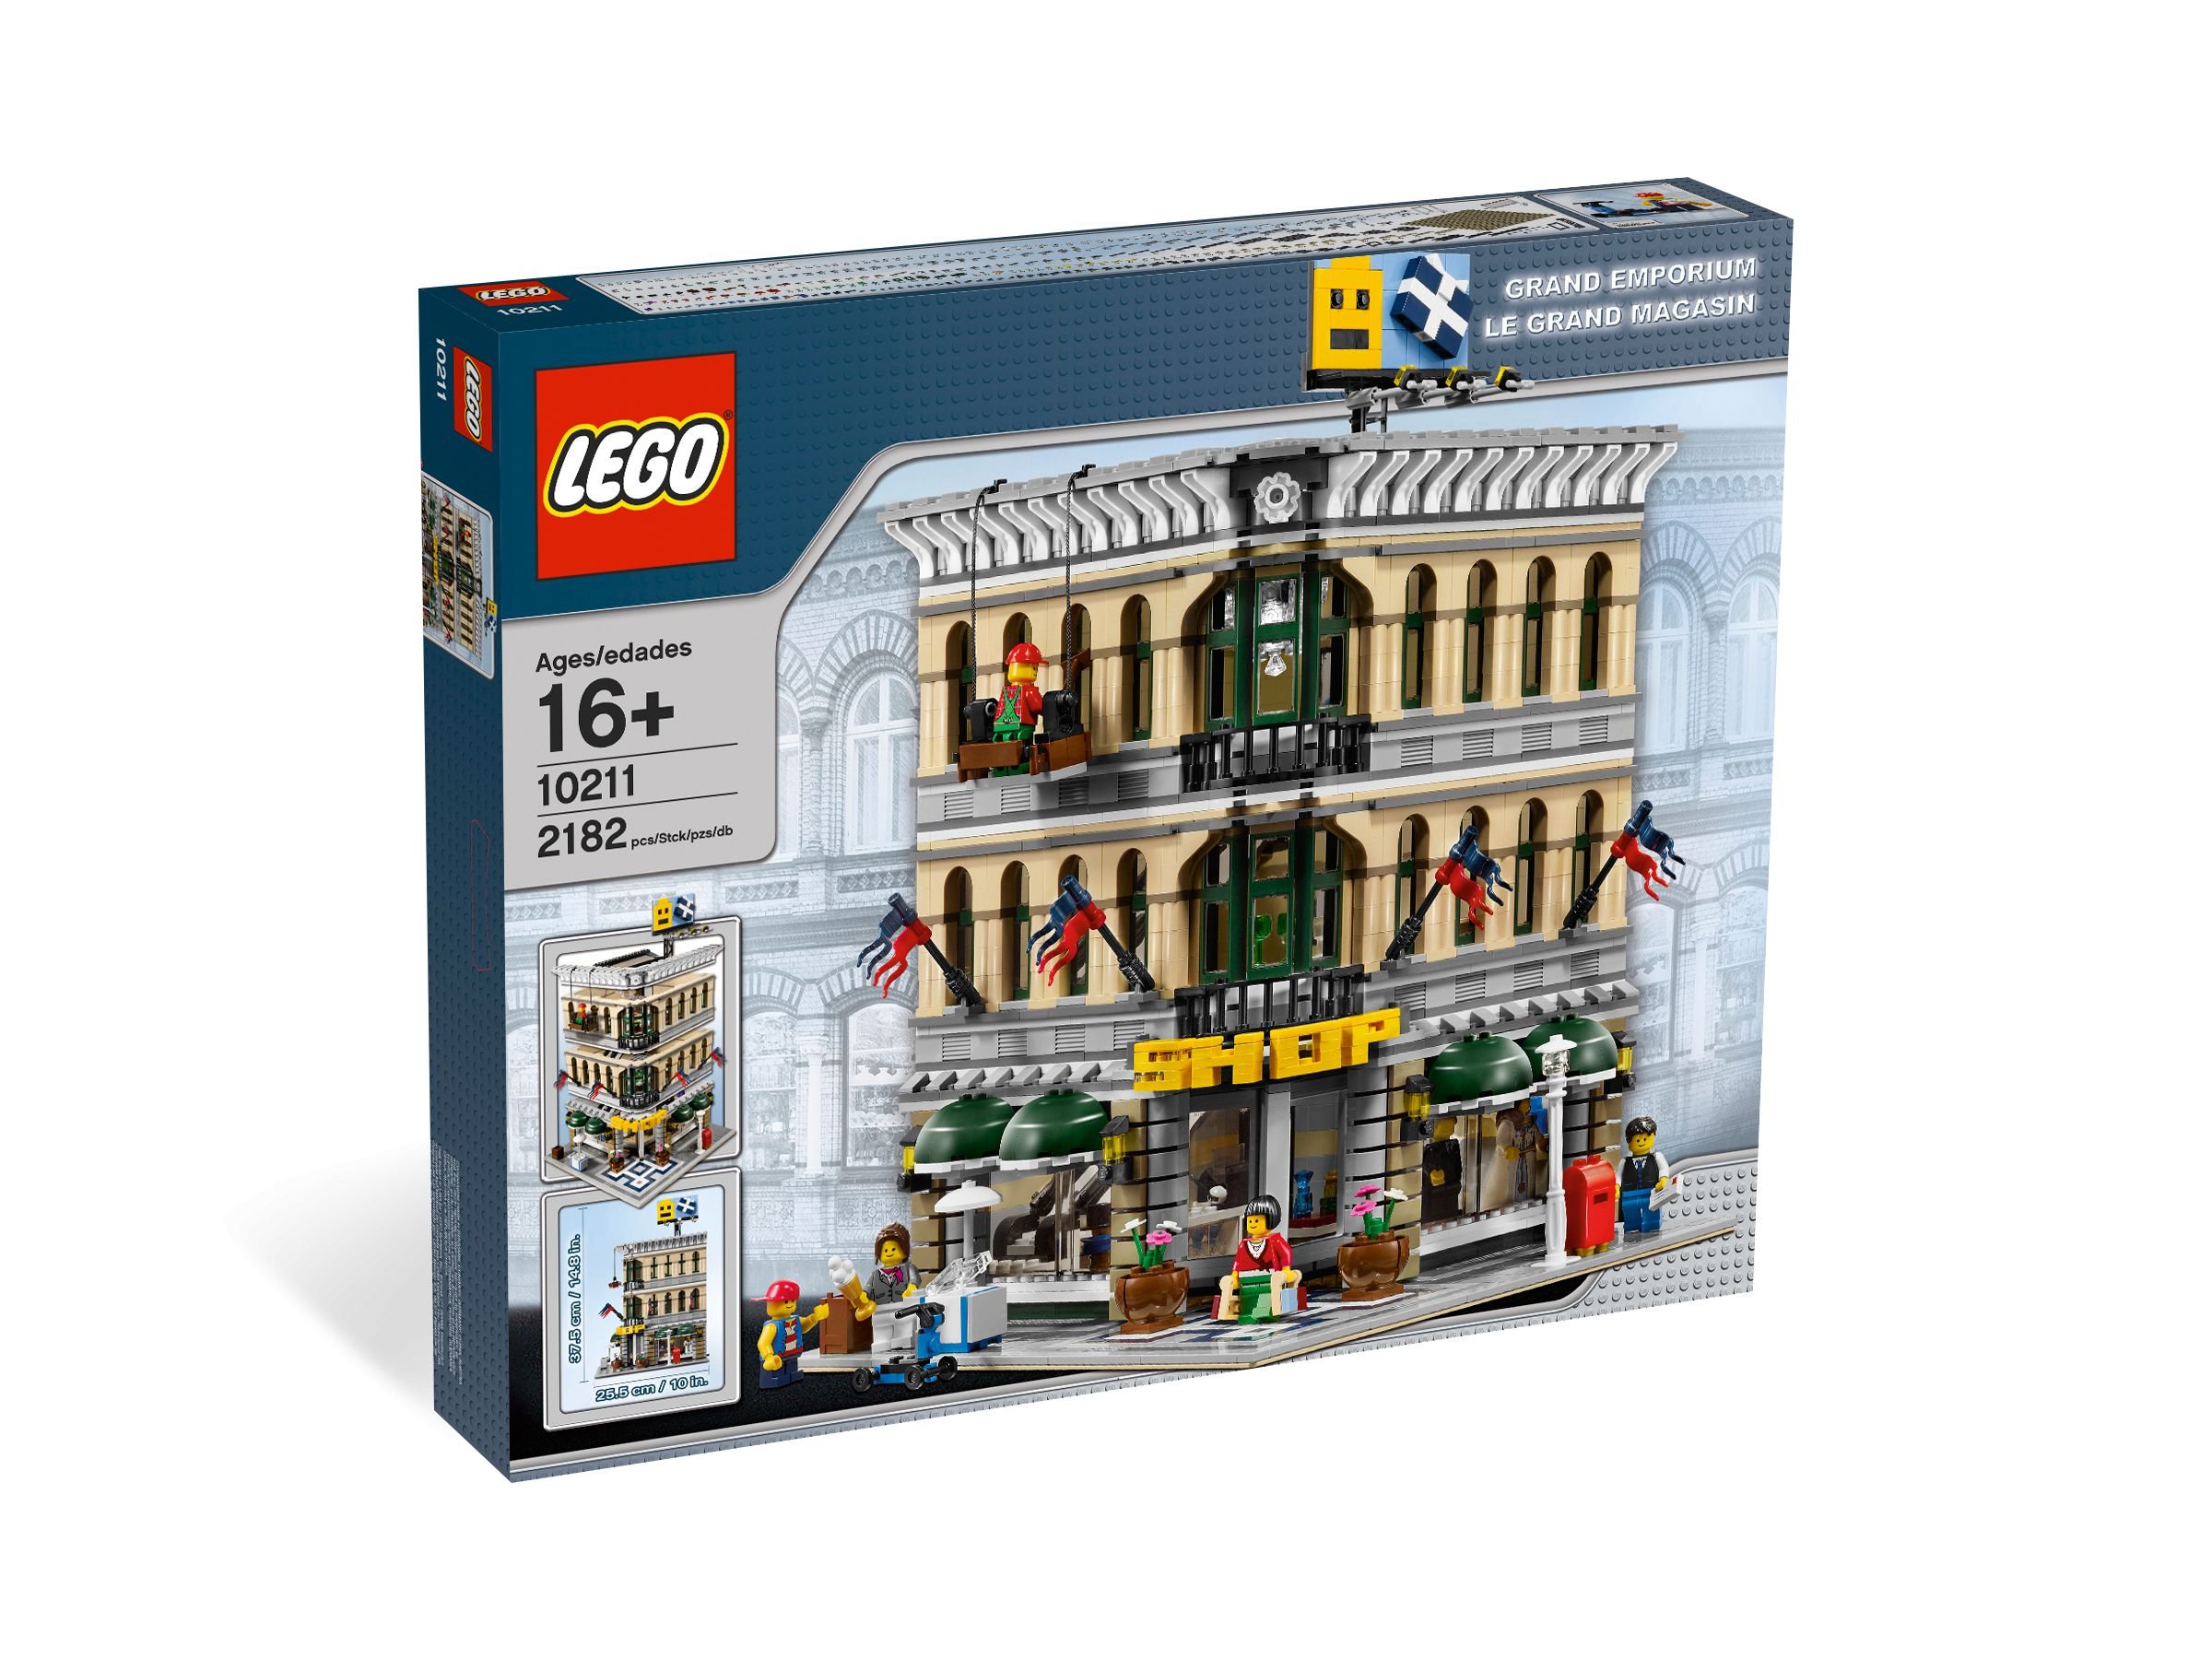 LEGO Advanced Models 10211 Großes Kaufhaus LEGO_10211_alt1.jpg